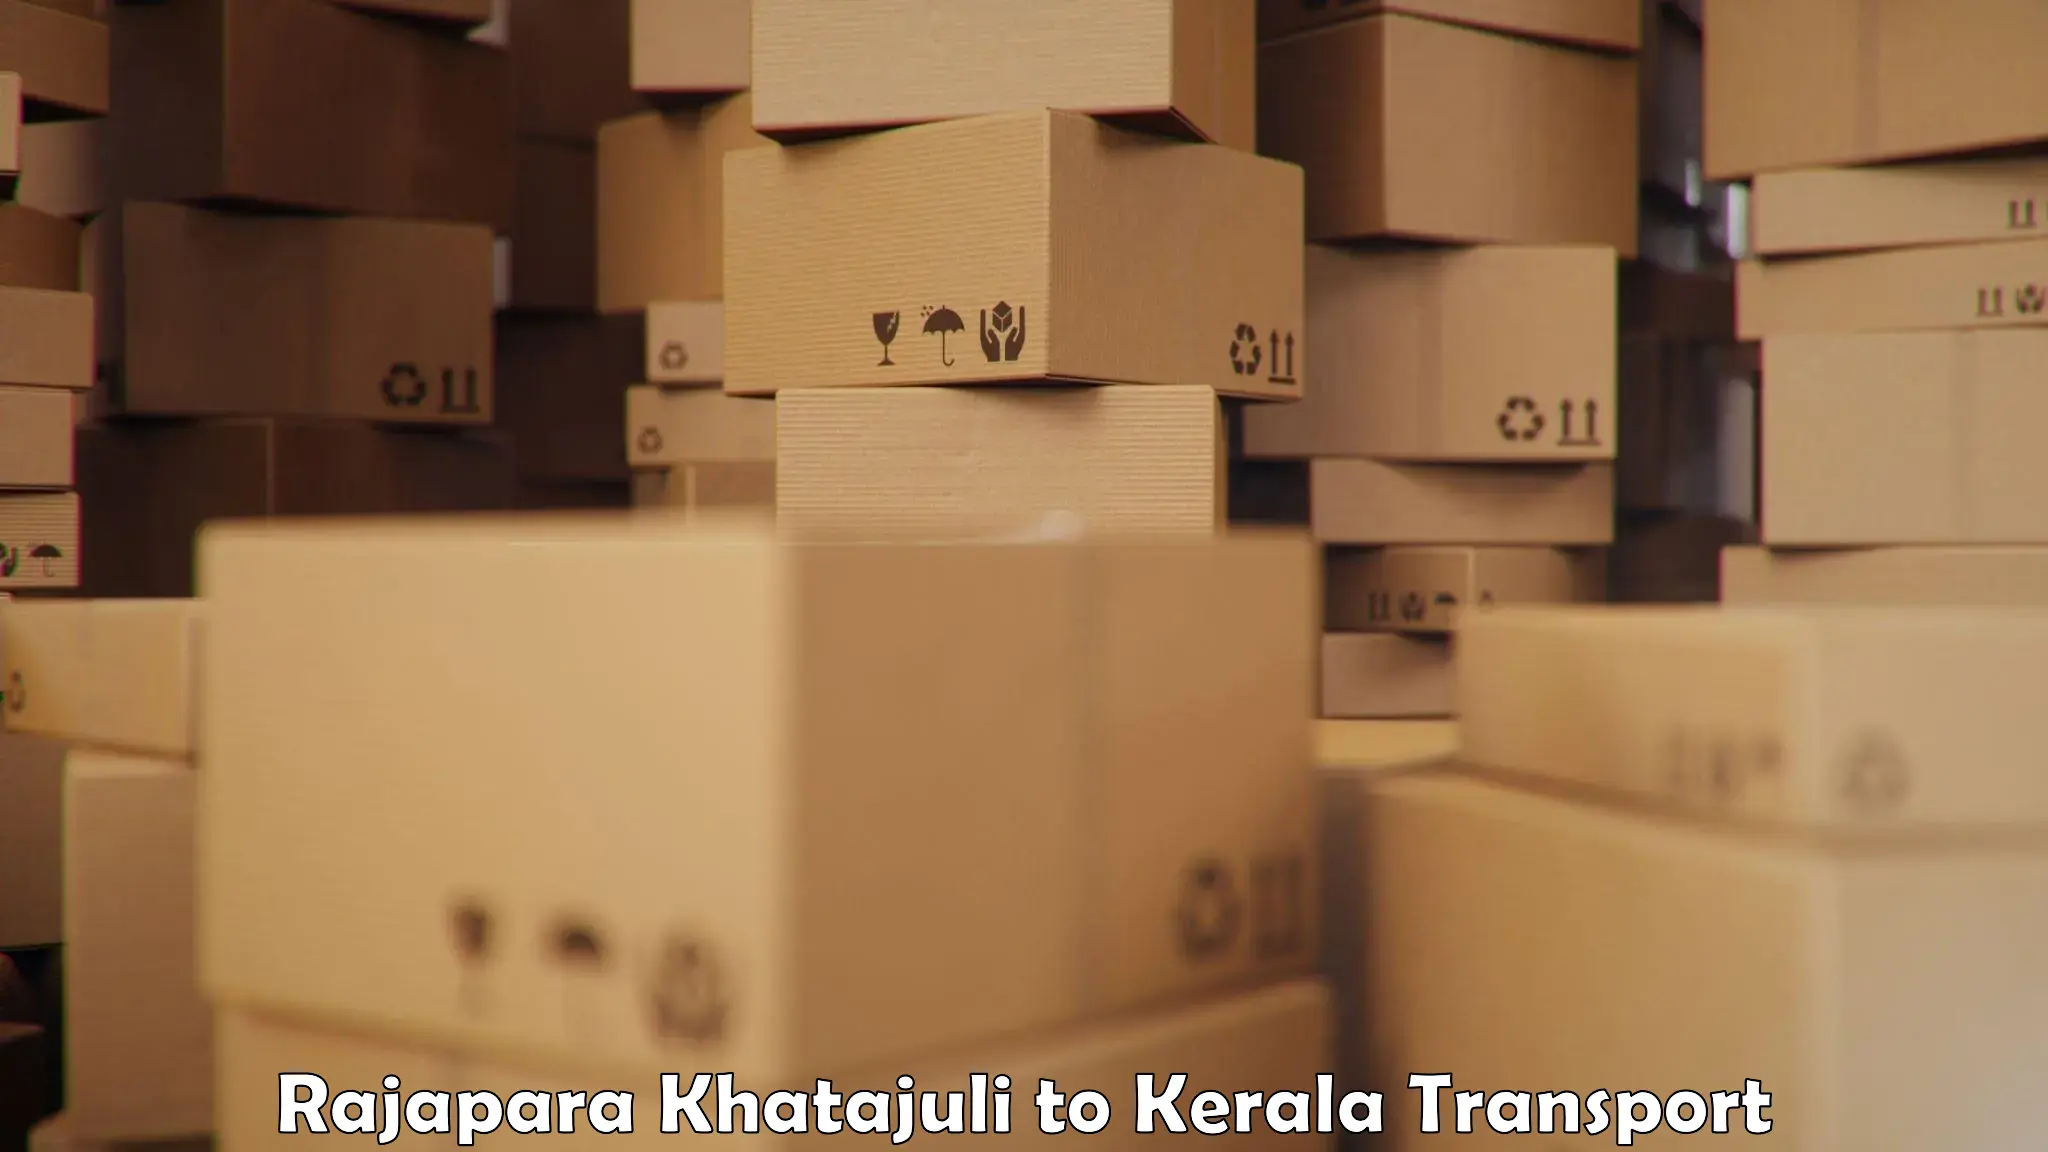 Truck transport companies in India Rajapara Khatajuli to Alakode